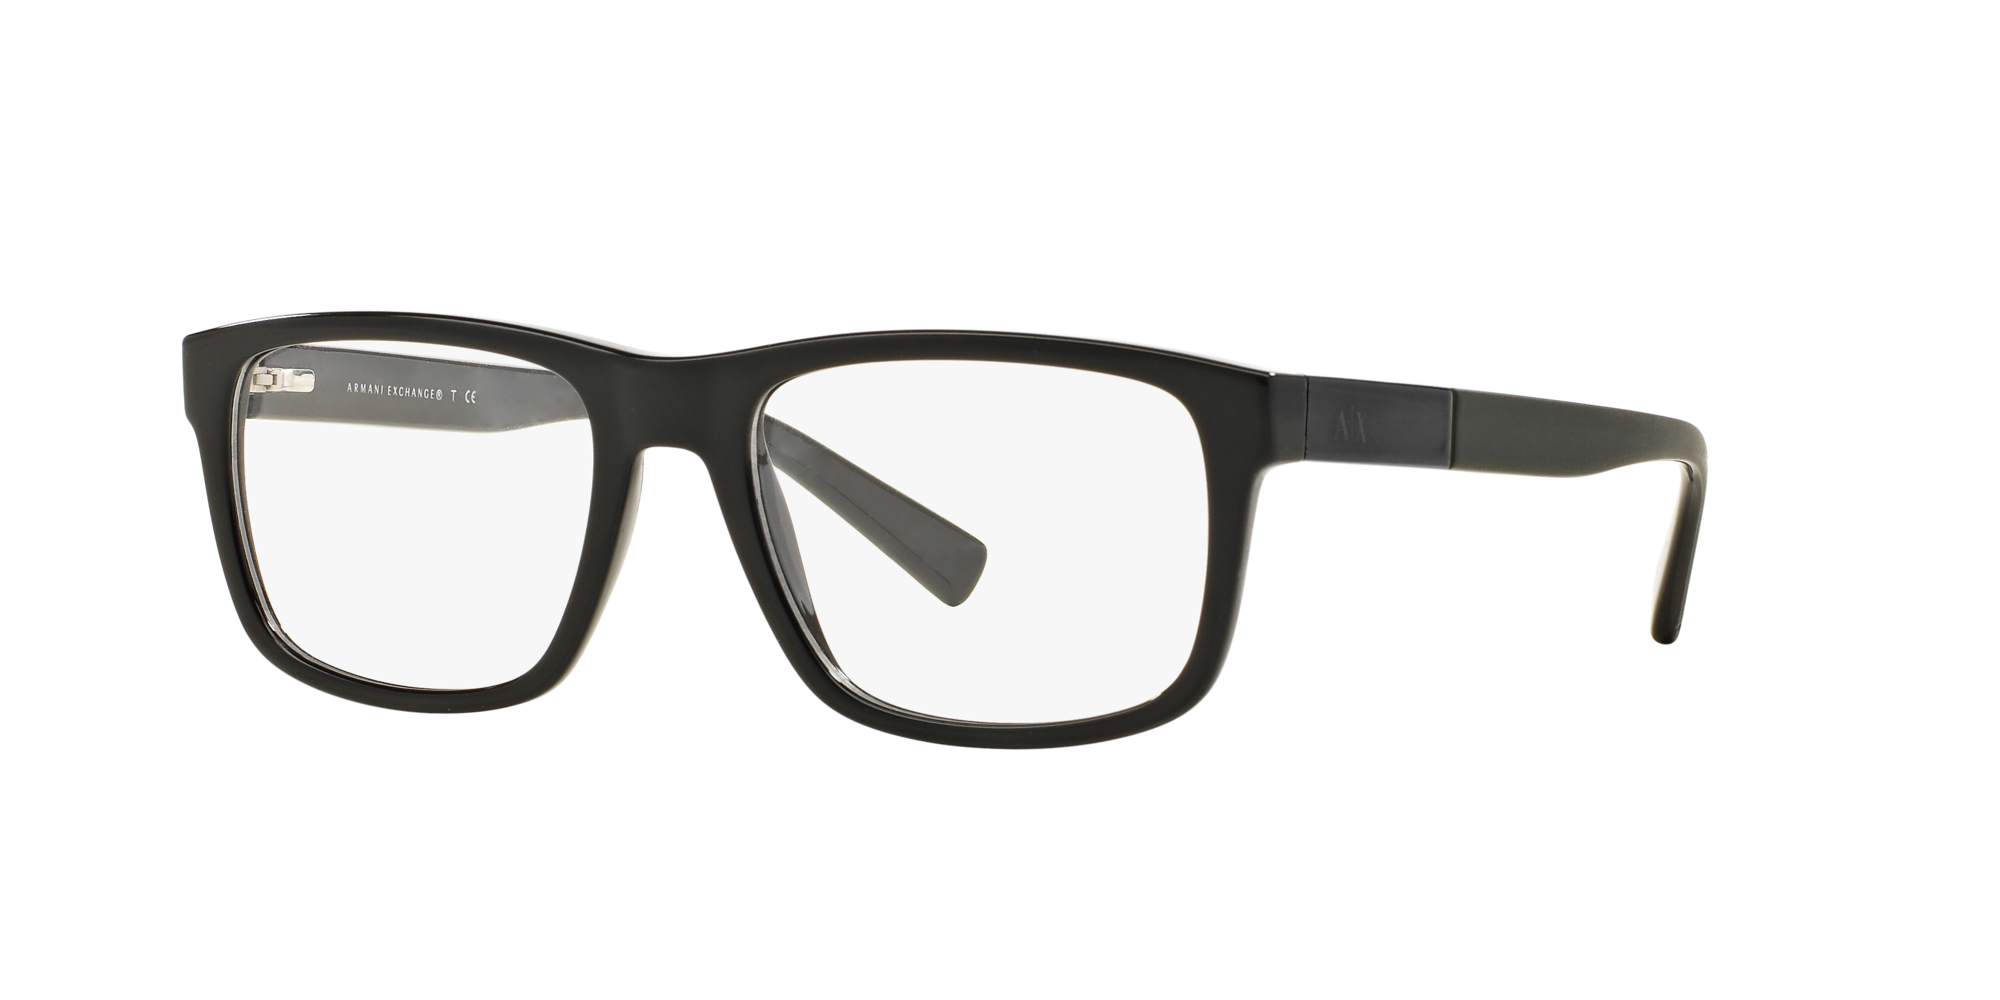 ax glasses frames